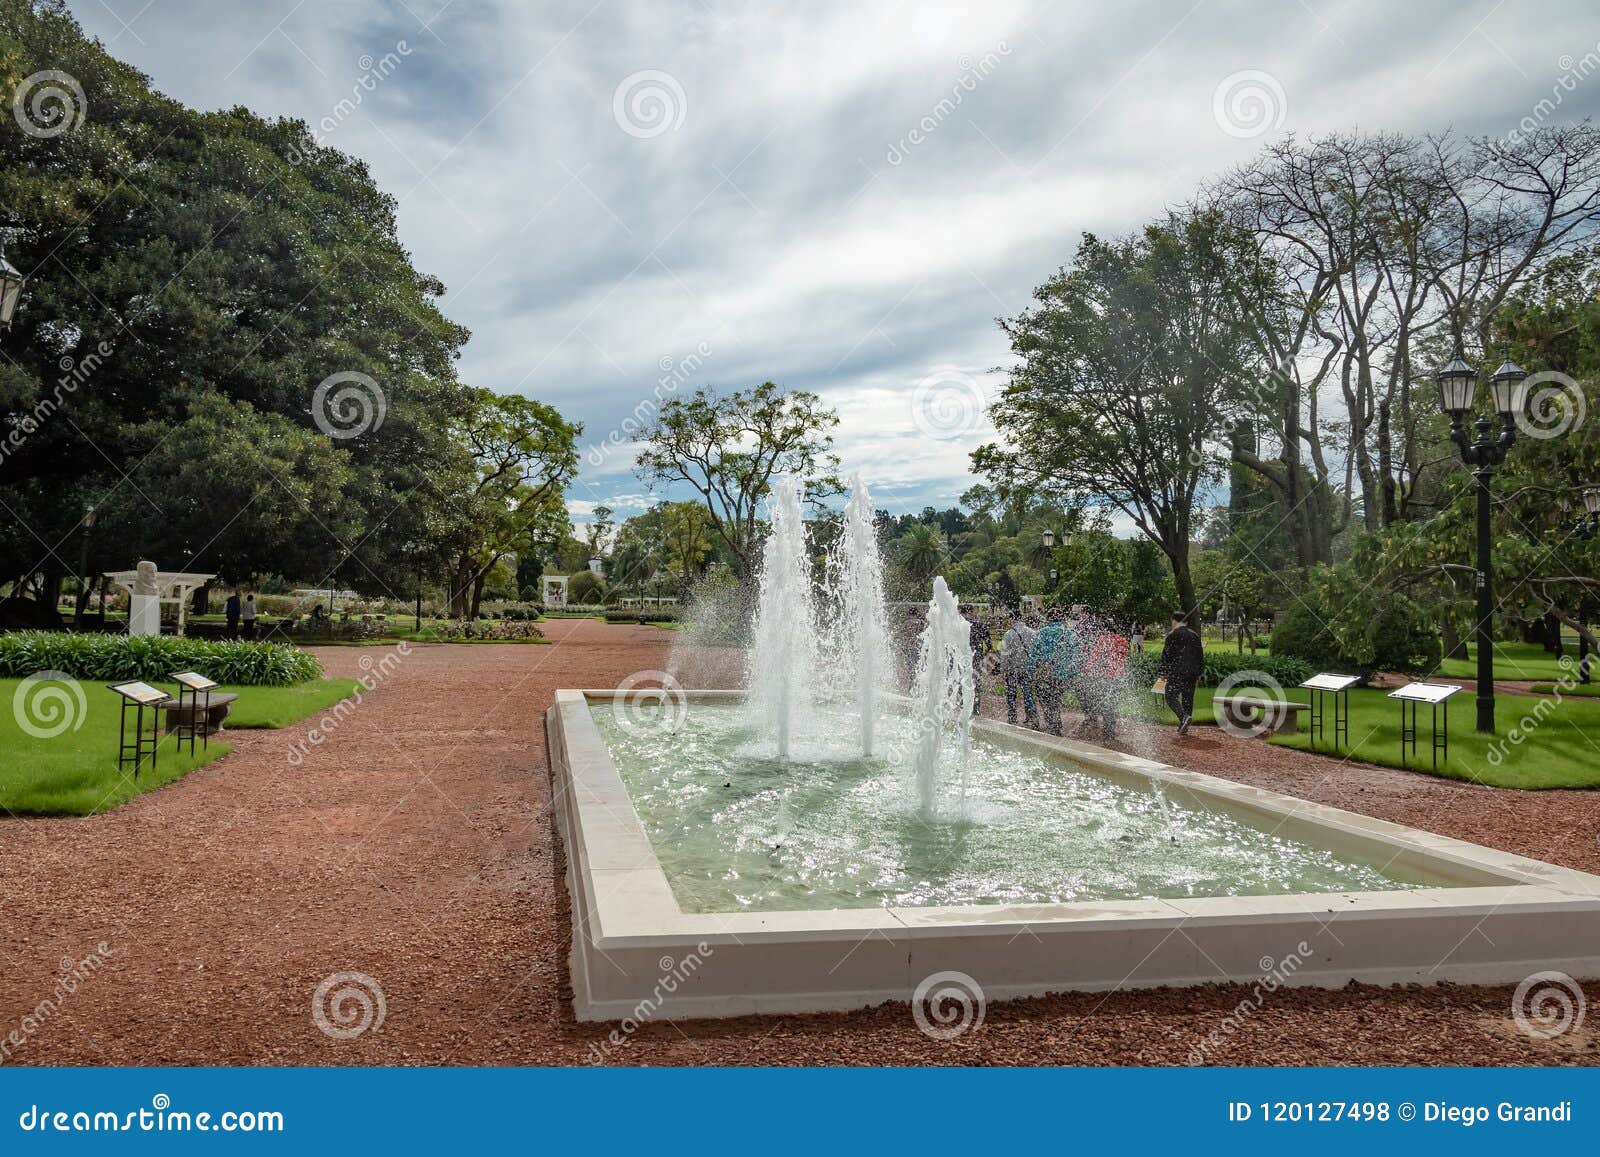 fountain at el rosedal rose park at bosques de palermo - buenos aires, argentina